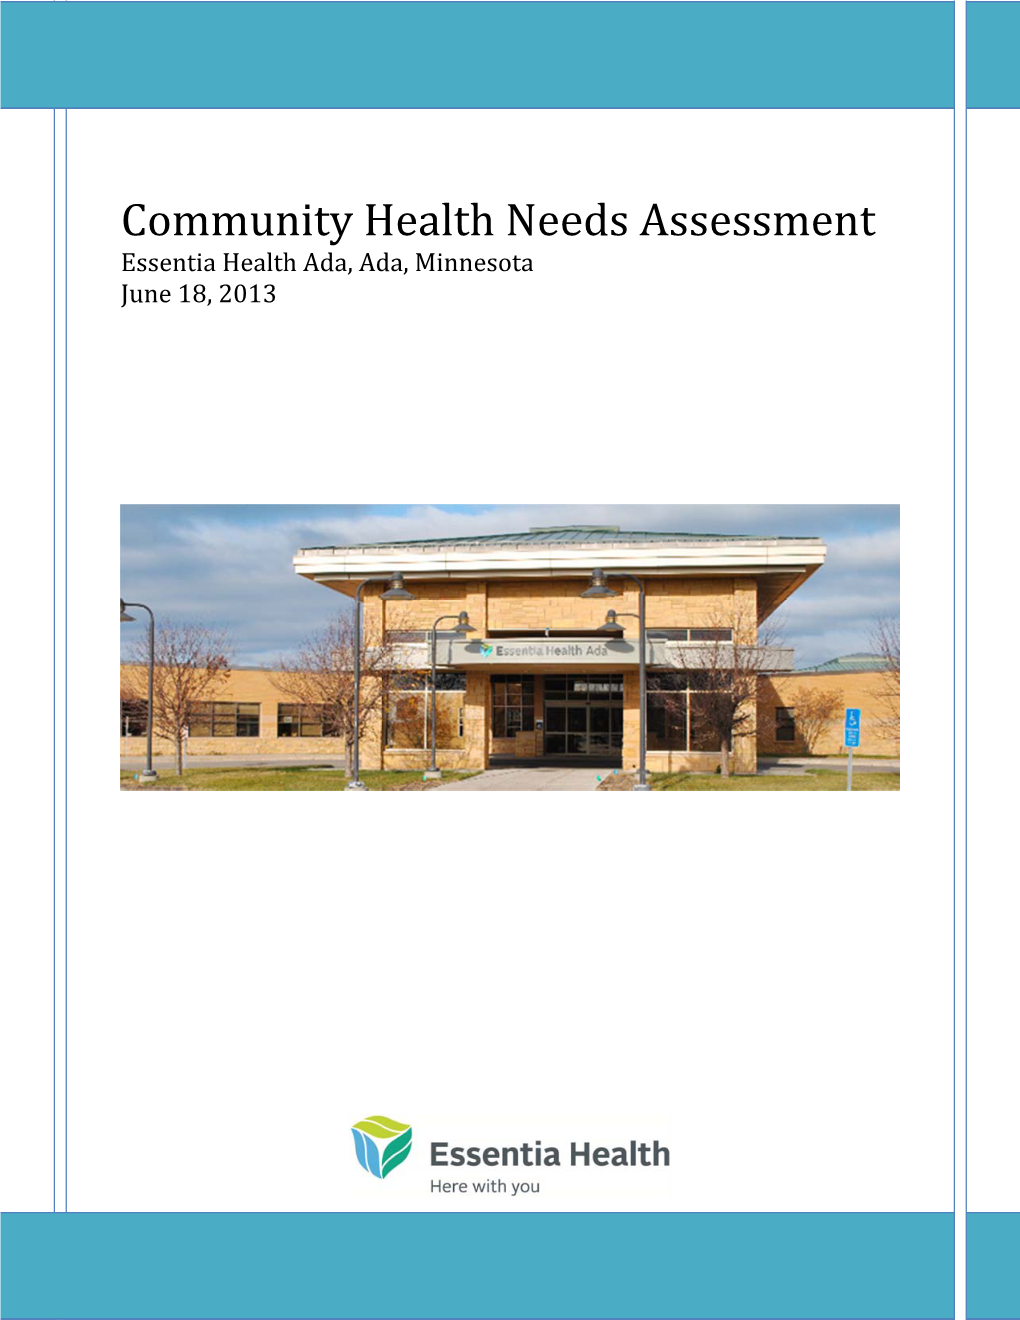 Essentia Health-Ada Community Health Needs Assessment, 2014